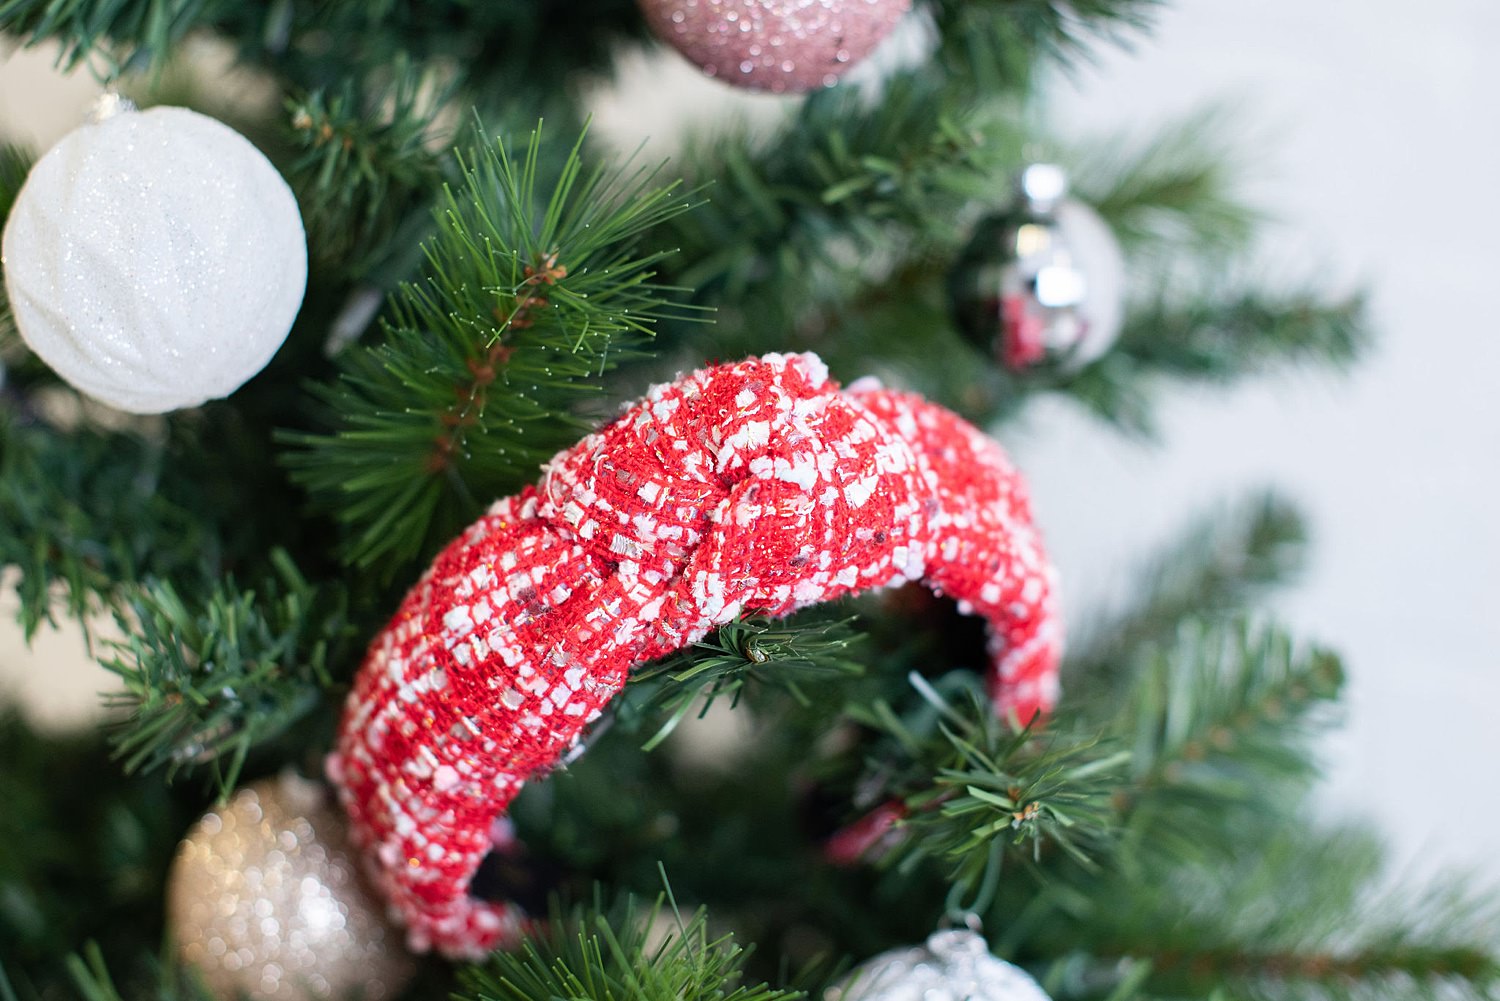 A red headband on the Christmas tree.